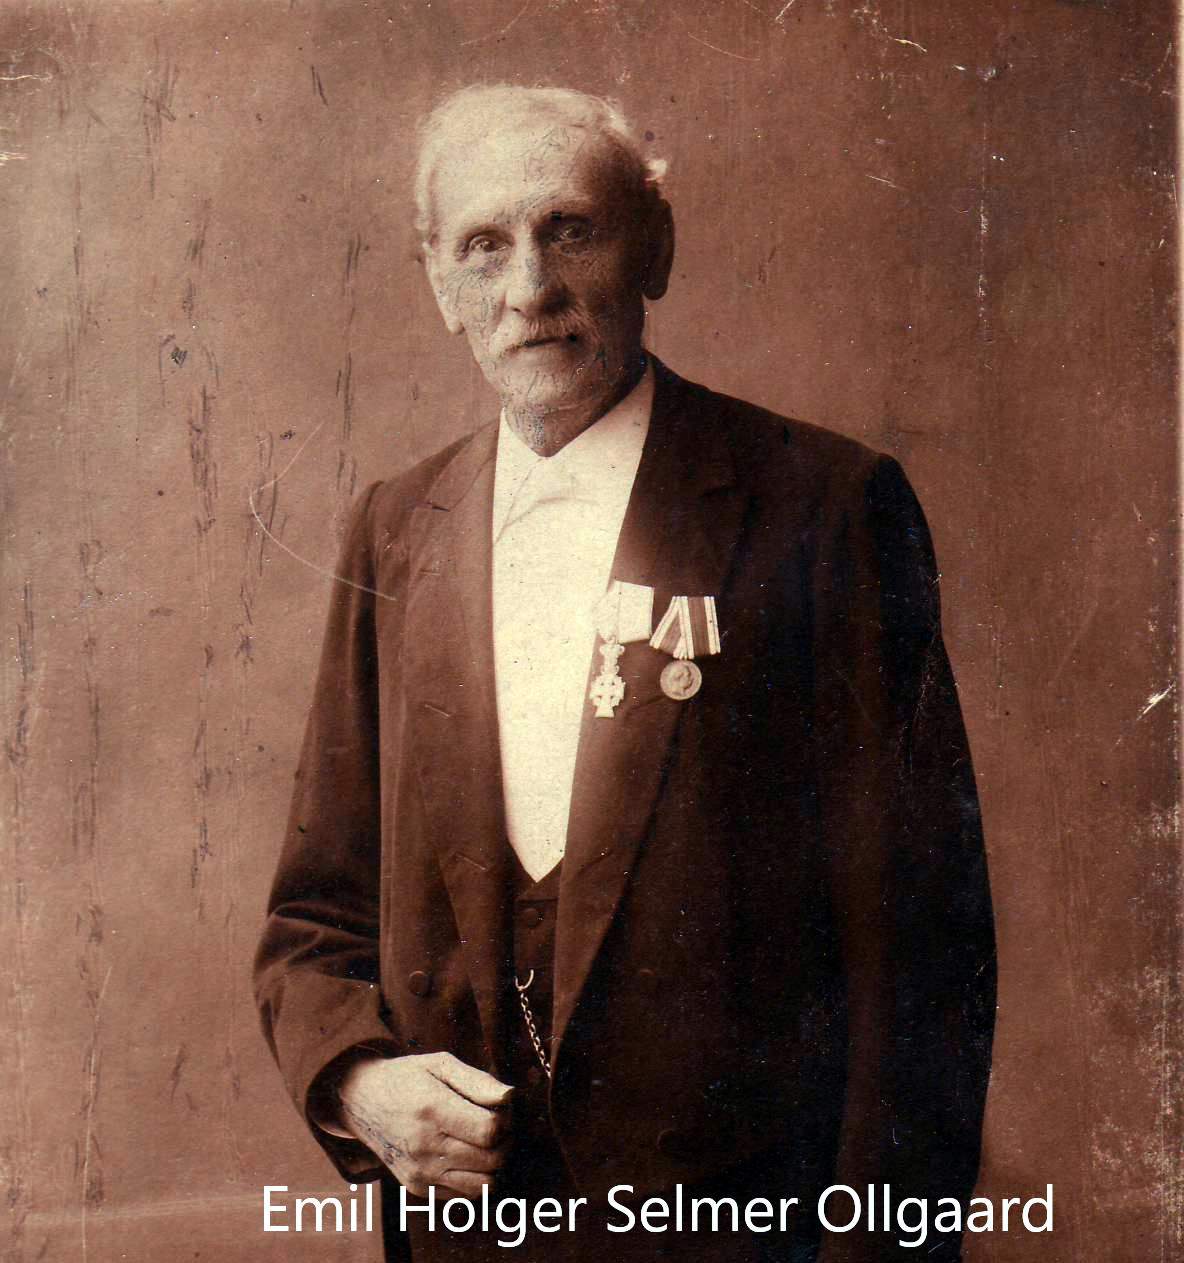 Emil H. S. Øllegaard